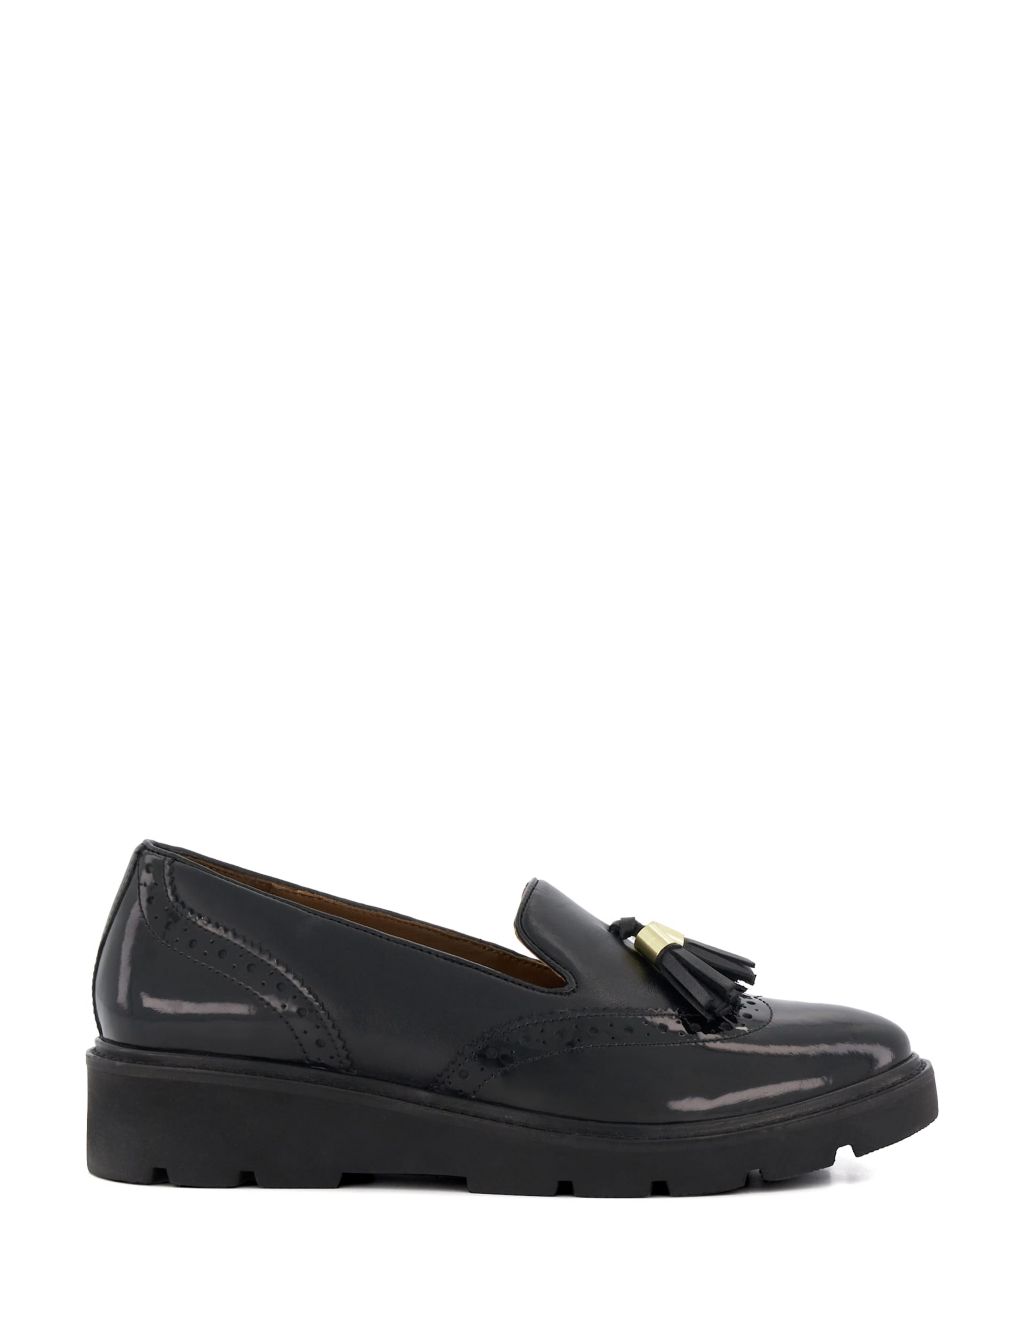 Leather Tassel Slip On Wedge Loafers image 1